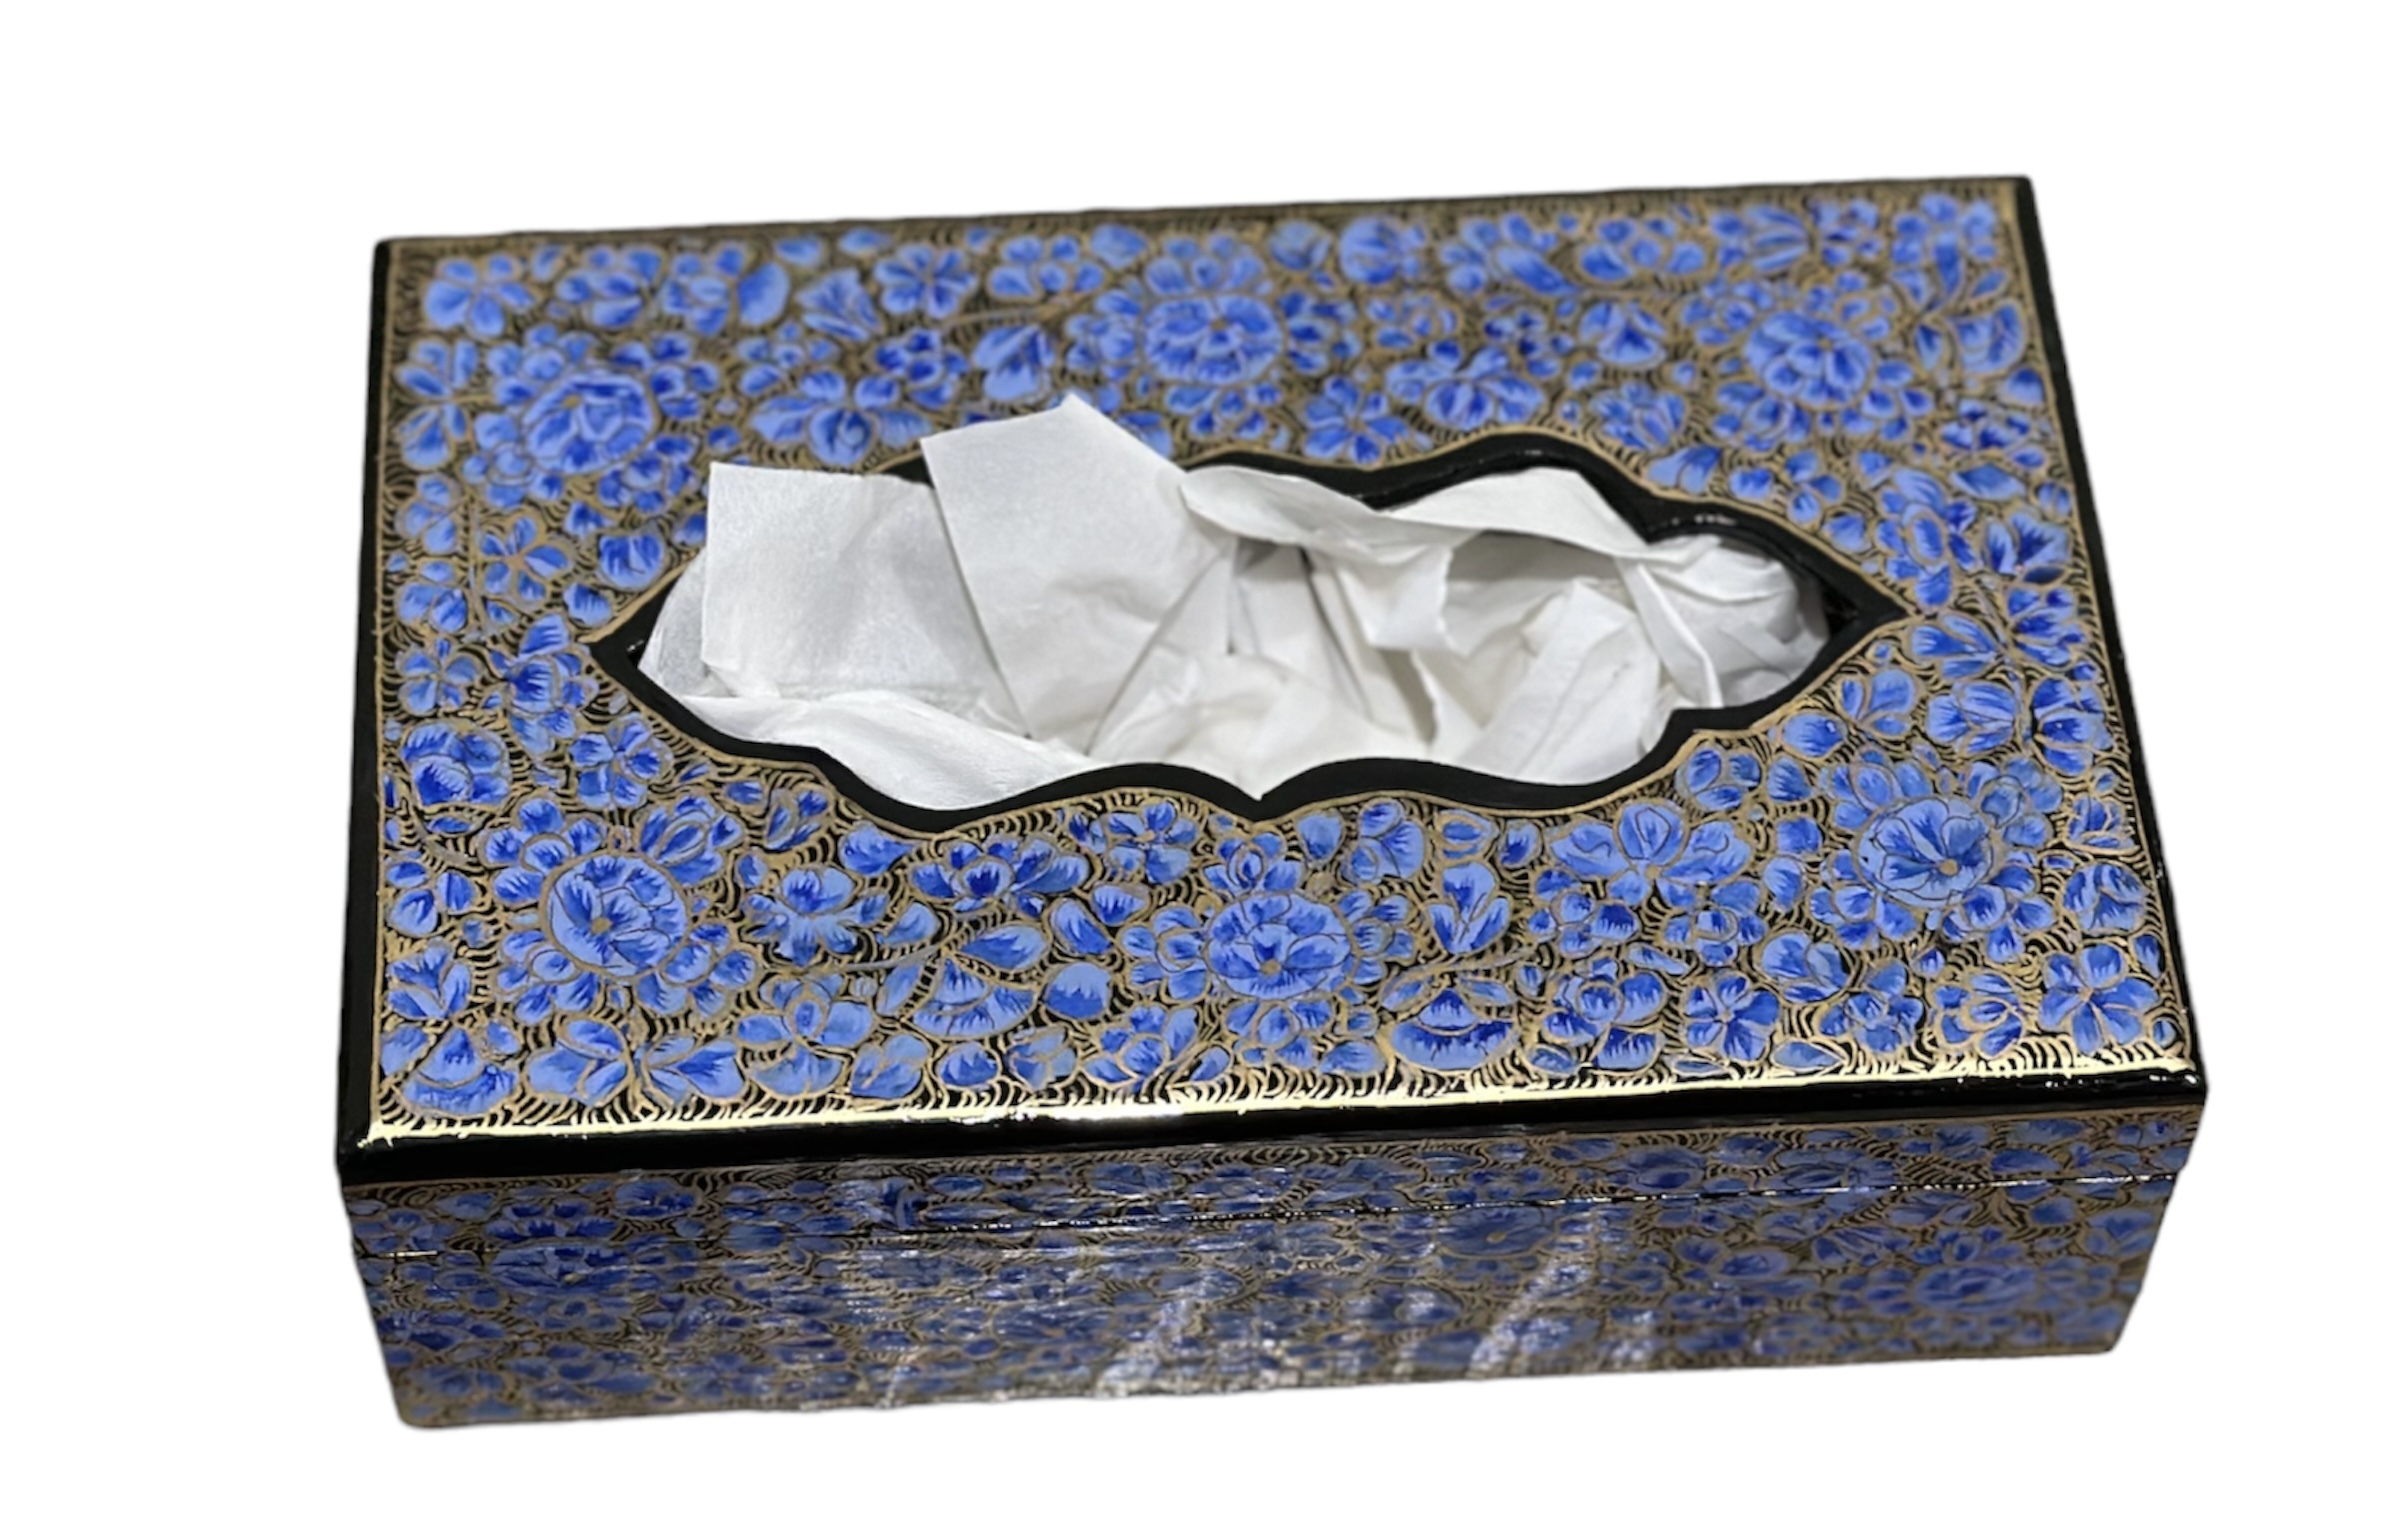 Paper mache tissue box, hand painted tissue holder, colorful tissue paper box